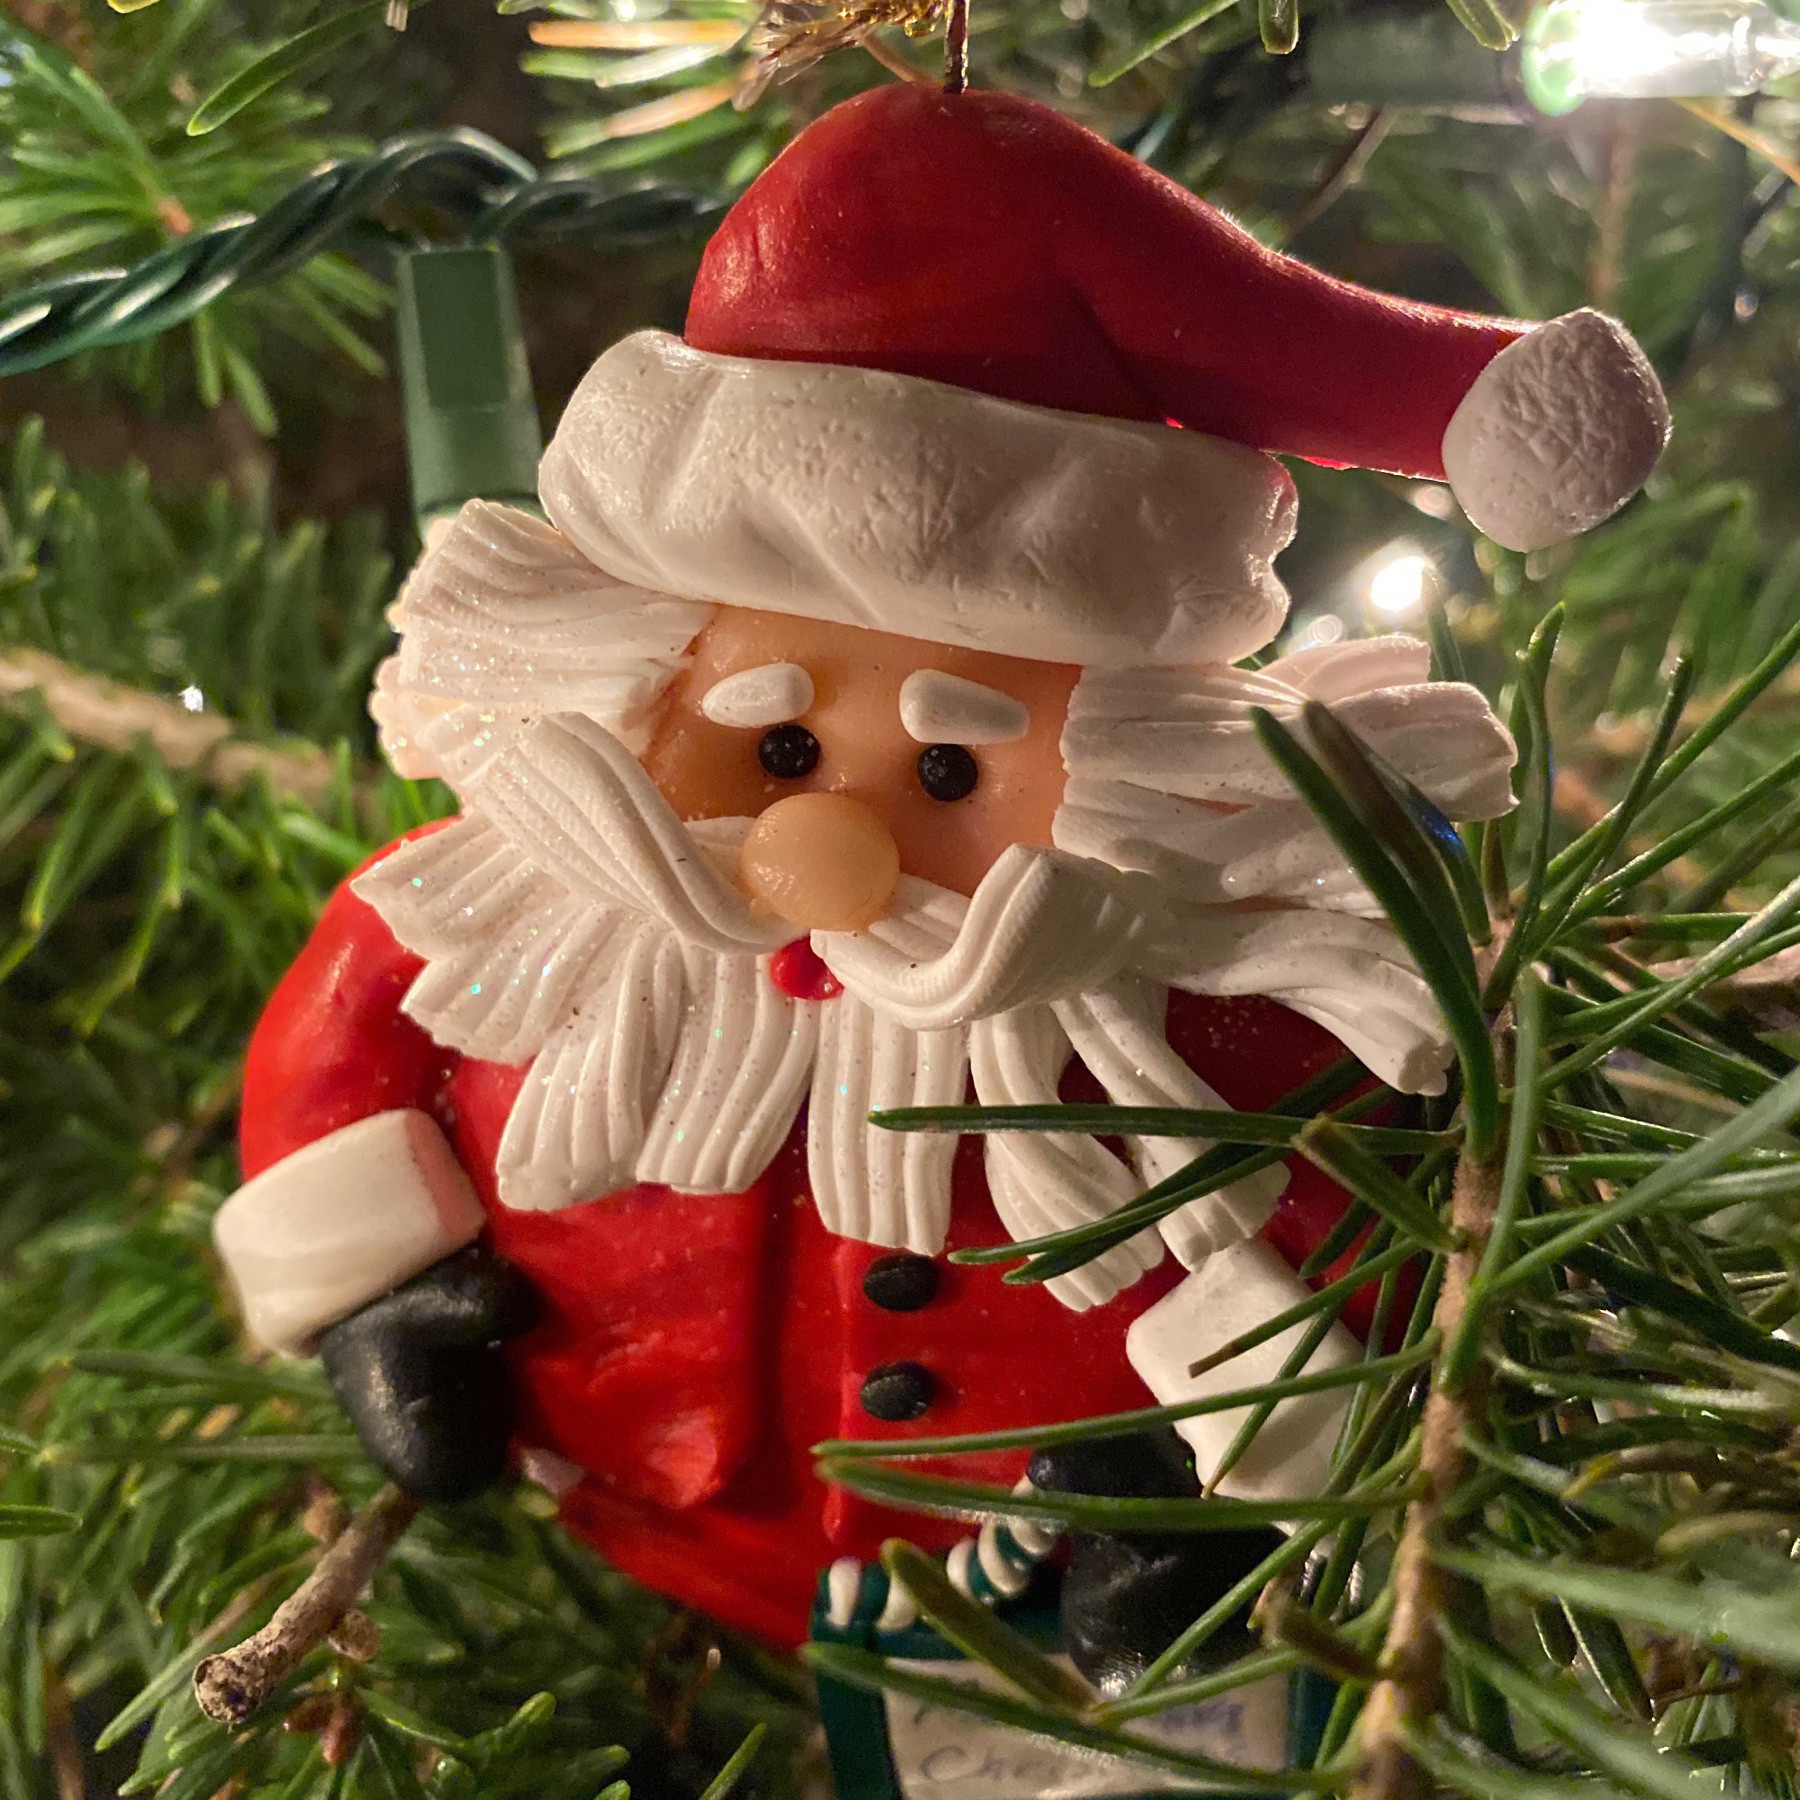 Santa Claus ornament on Christmas tree.